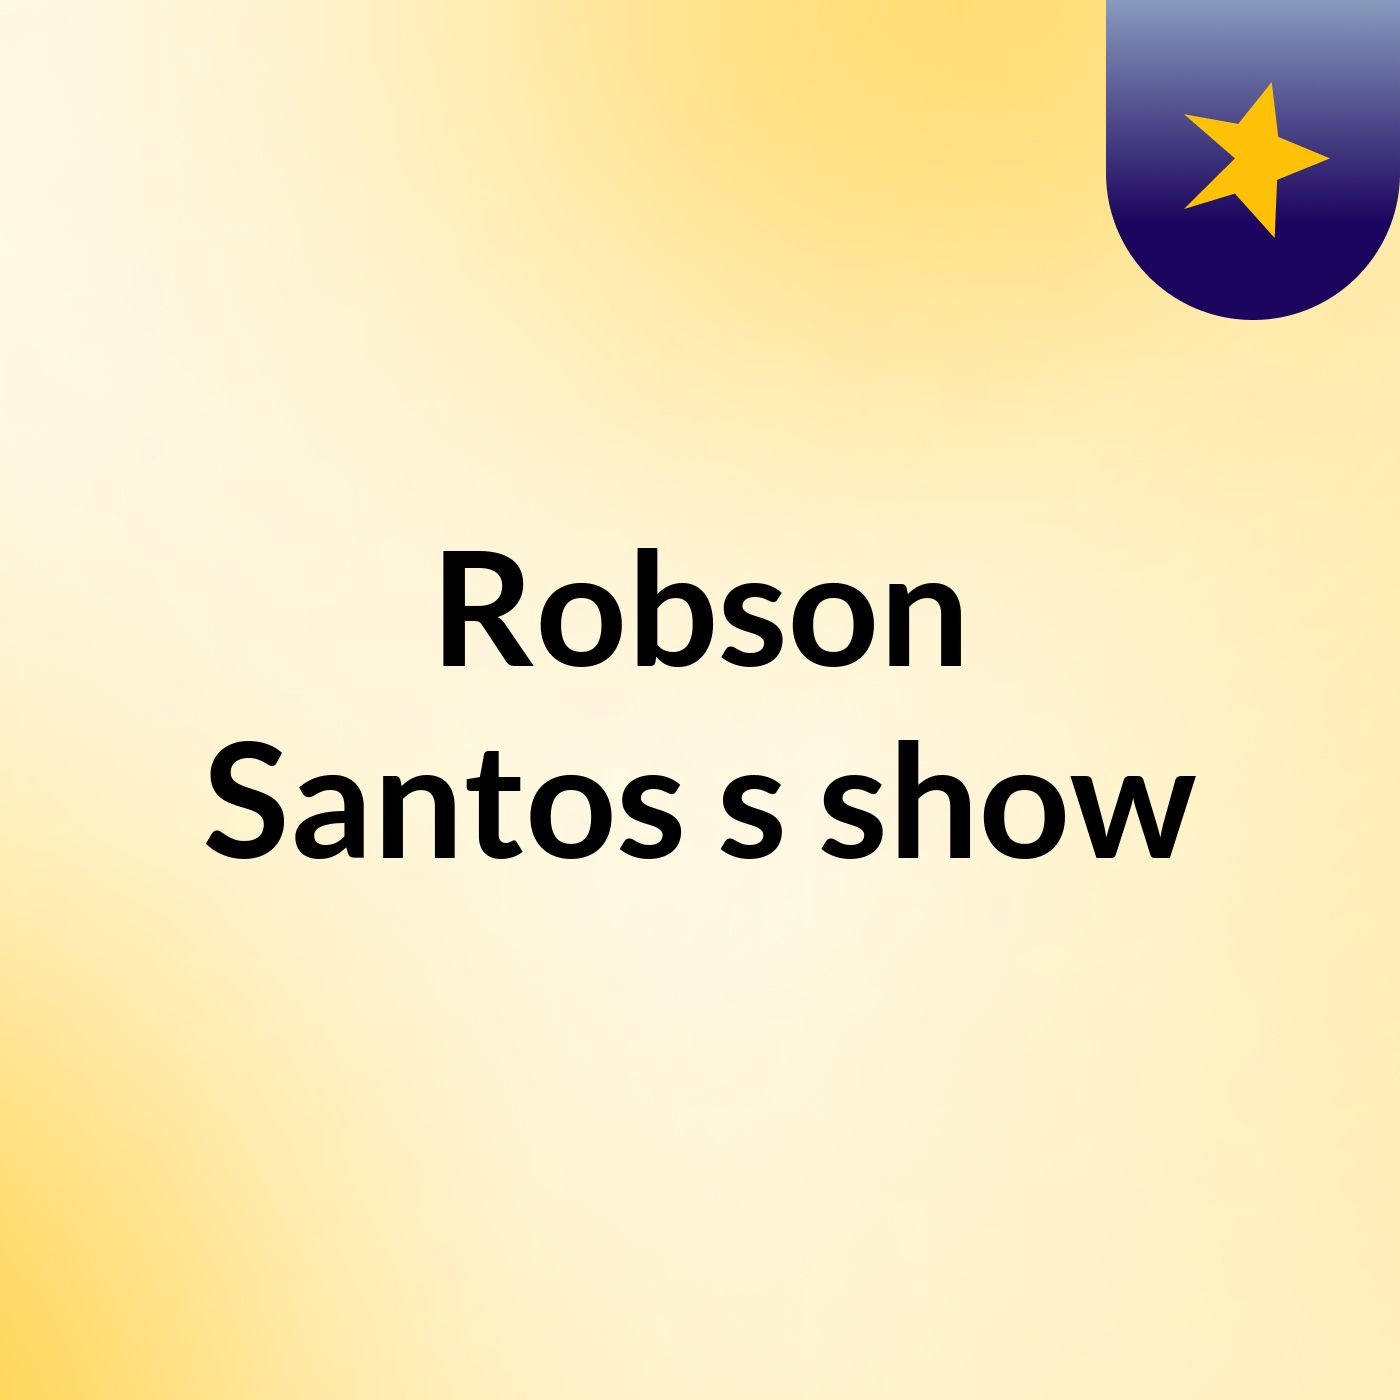 Robson Santos's show